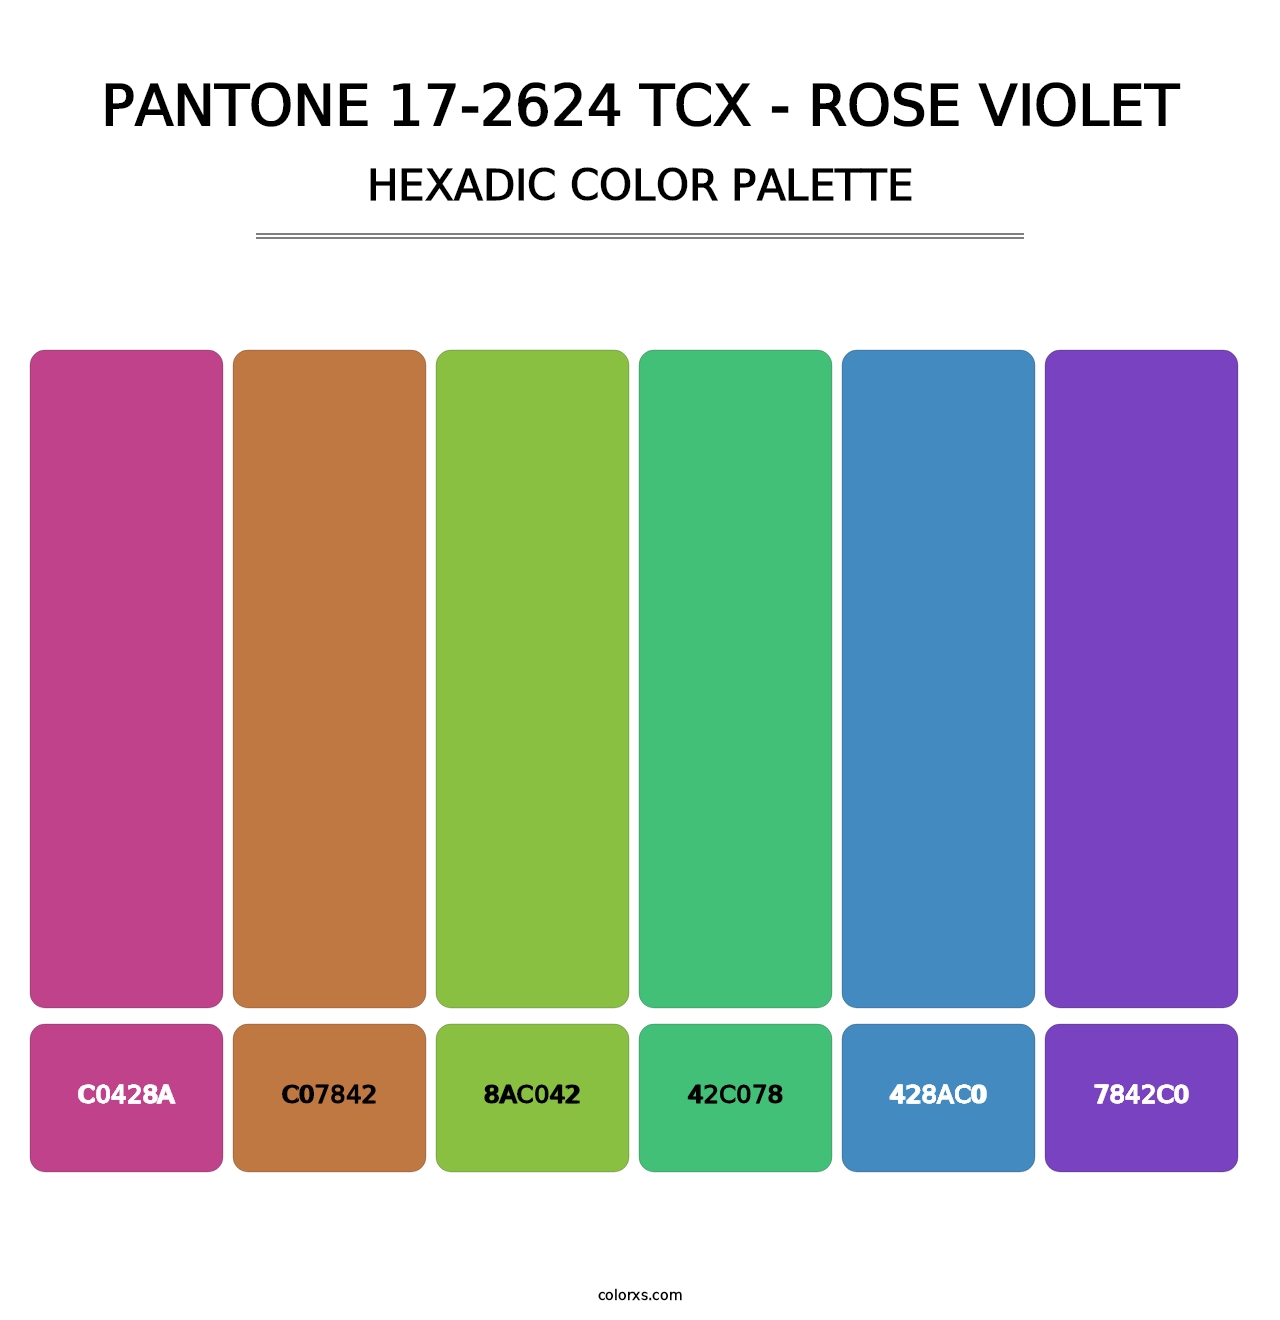 PANTONE 17-2624 TCX - Rose Violet - Hexadic Color Palette